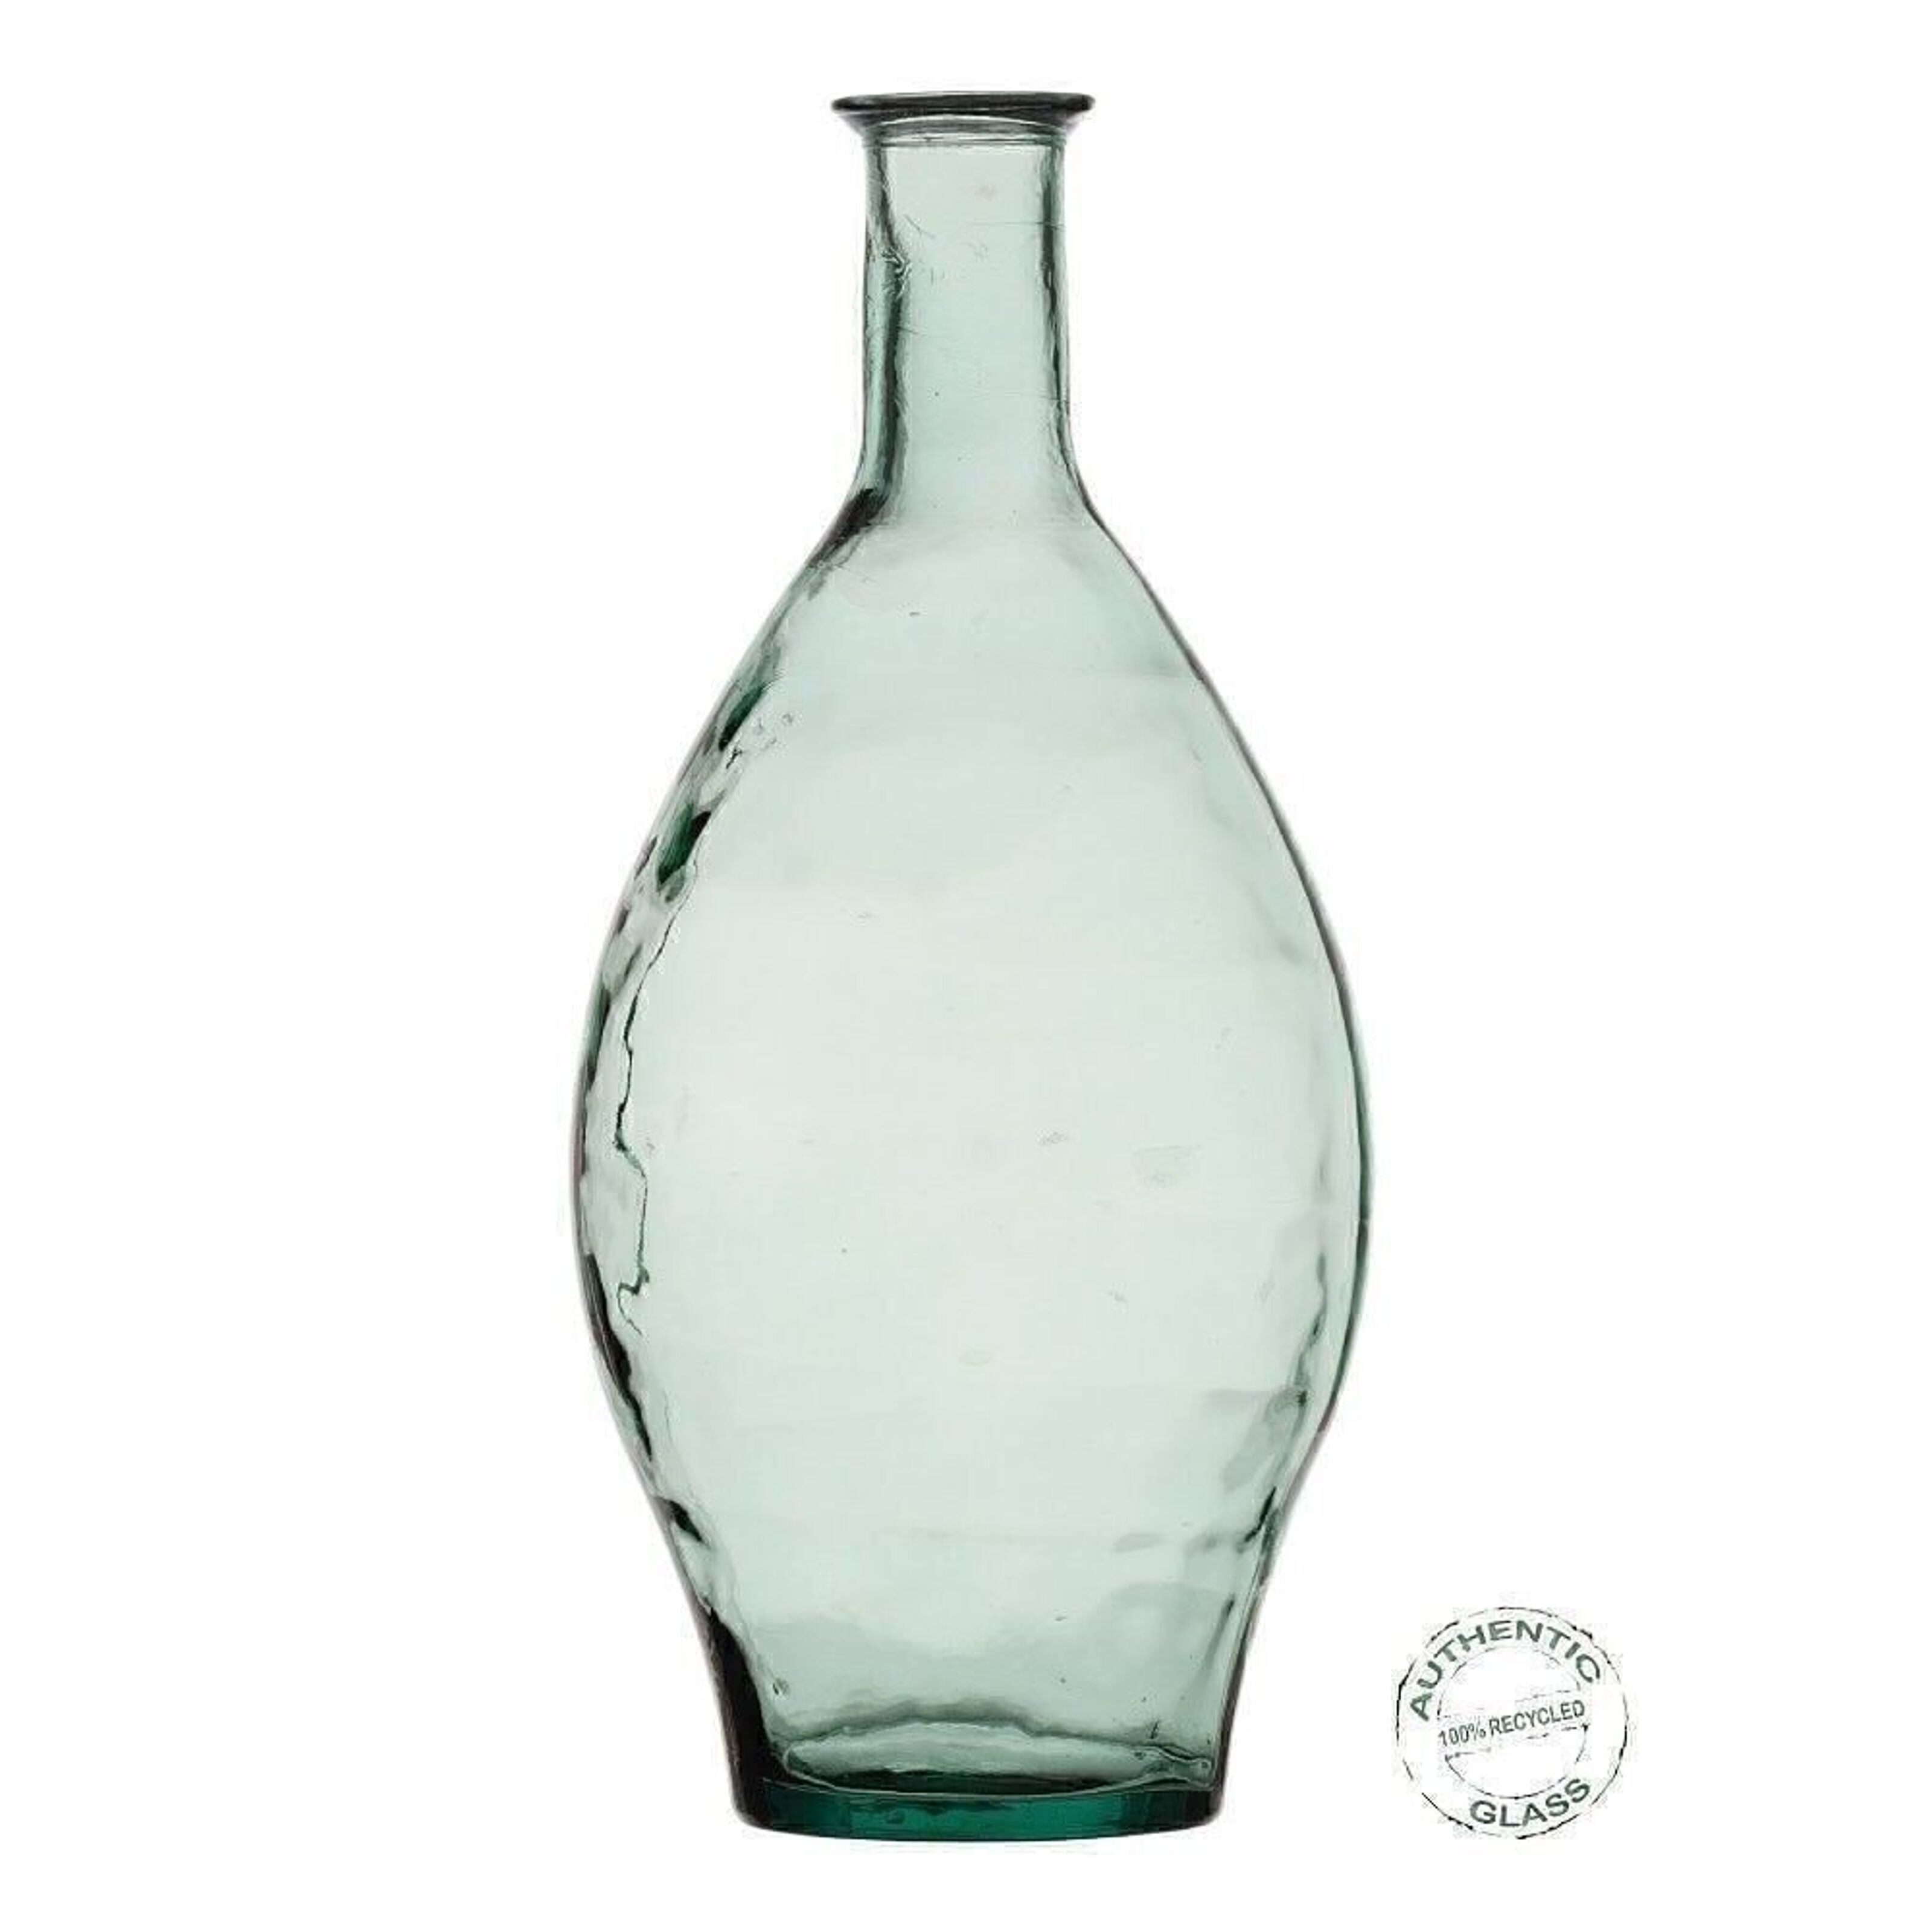 Boite déco en verre - vert D8,8xH8,4cm - VERDA - alinea